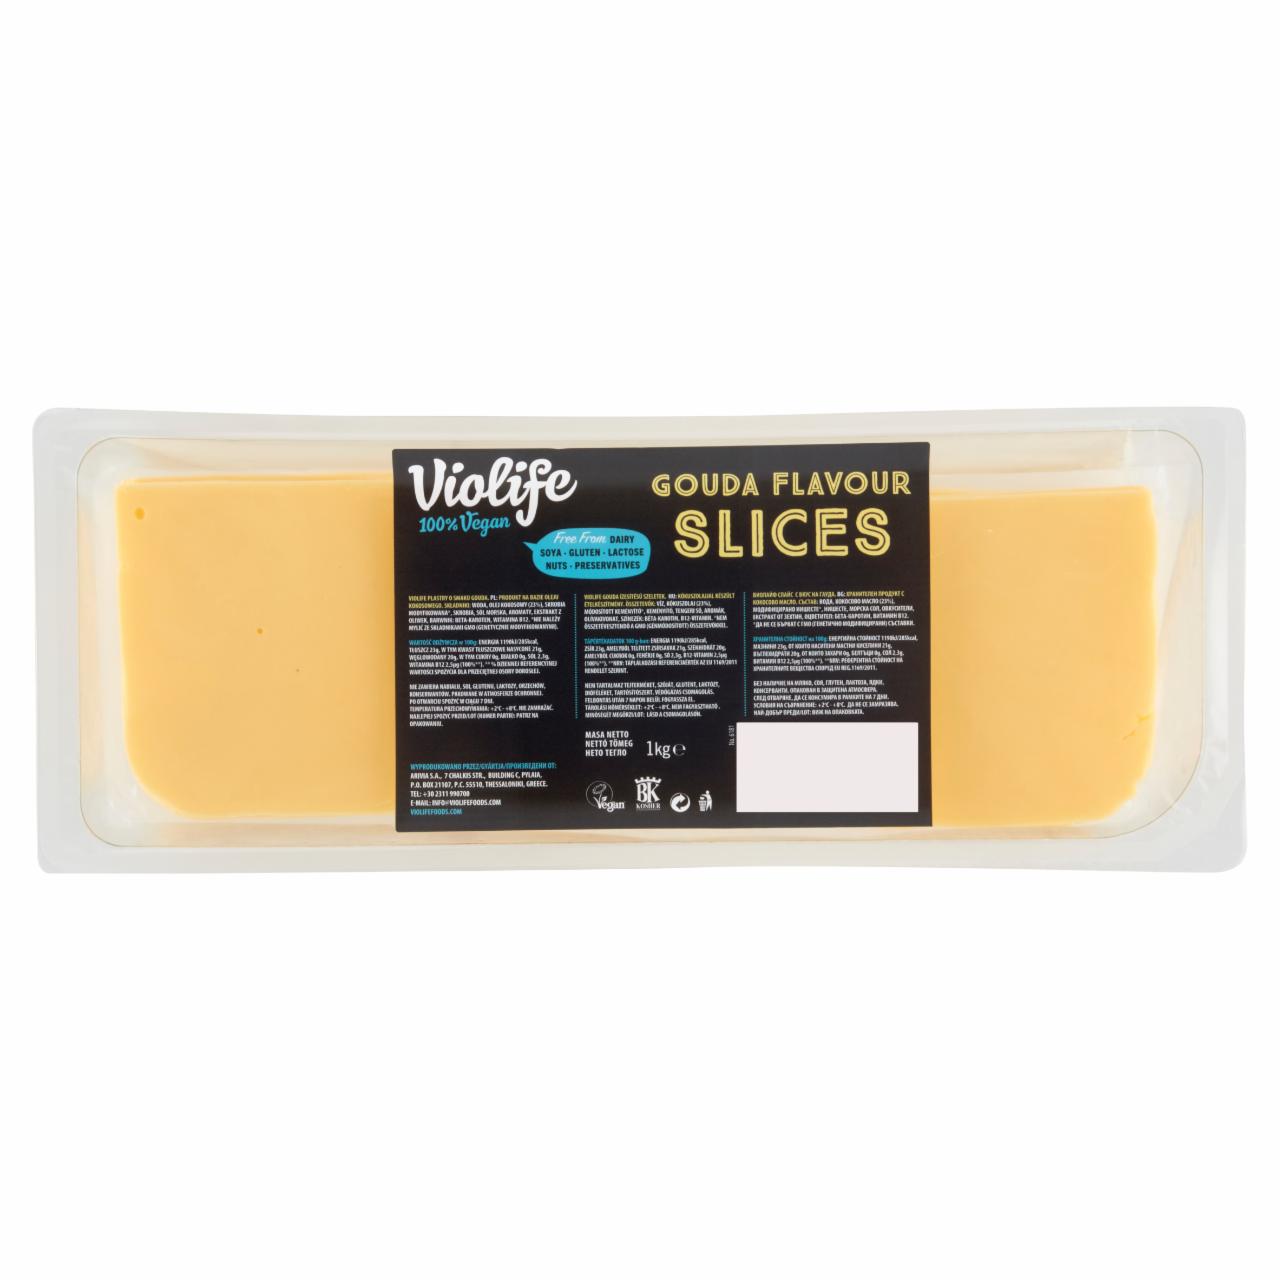 Photo - Violife Gouda Flavoured Slices 1 kg